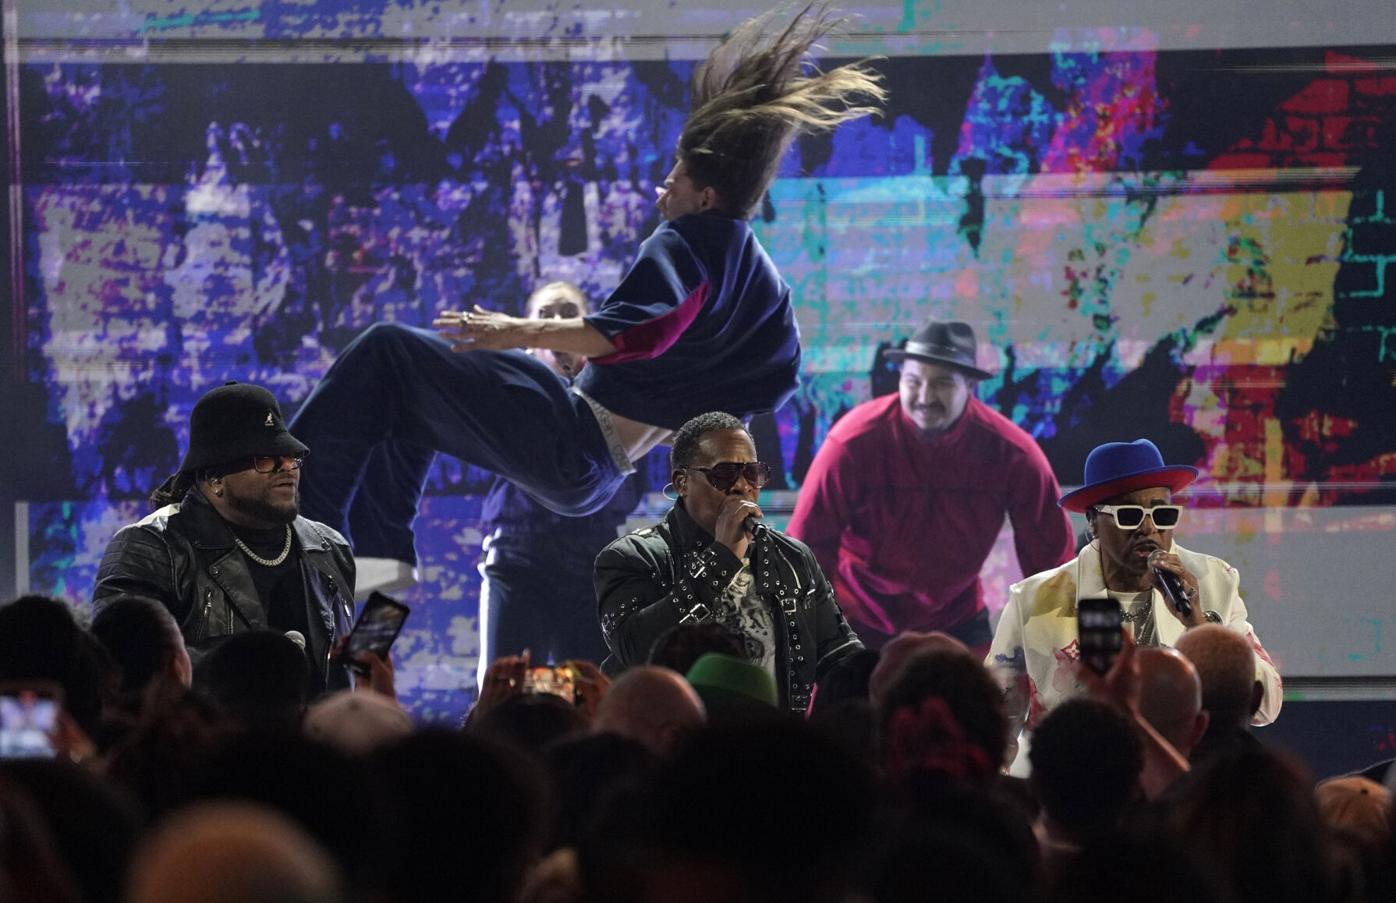 Queen Latifah, Chuck D and more rap legends on 'Rapper's Delight